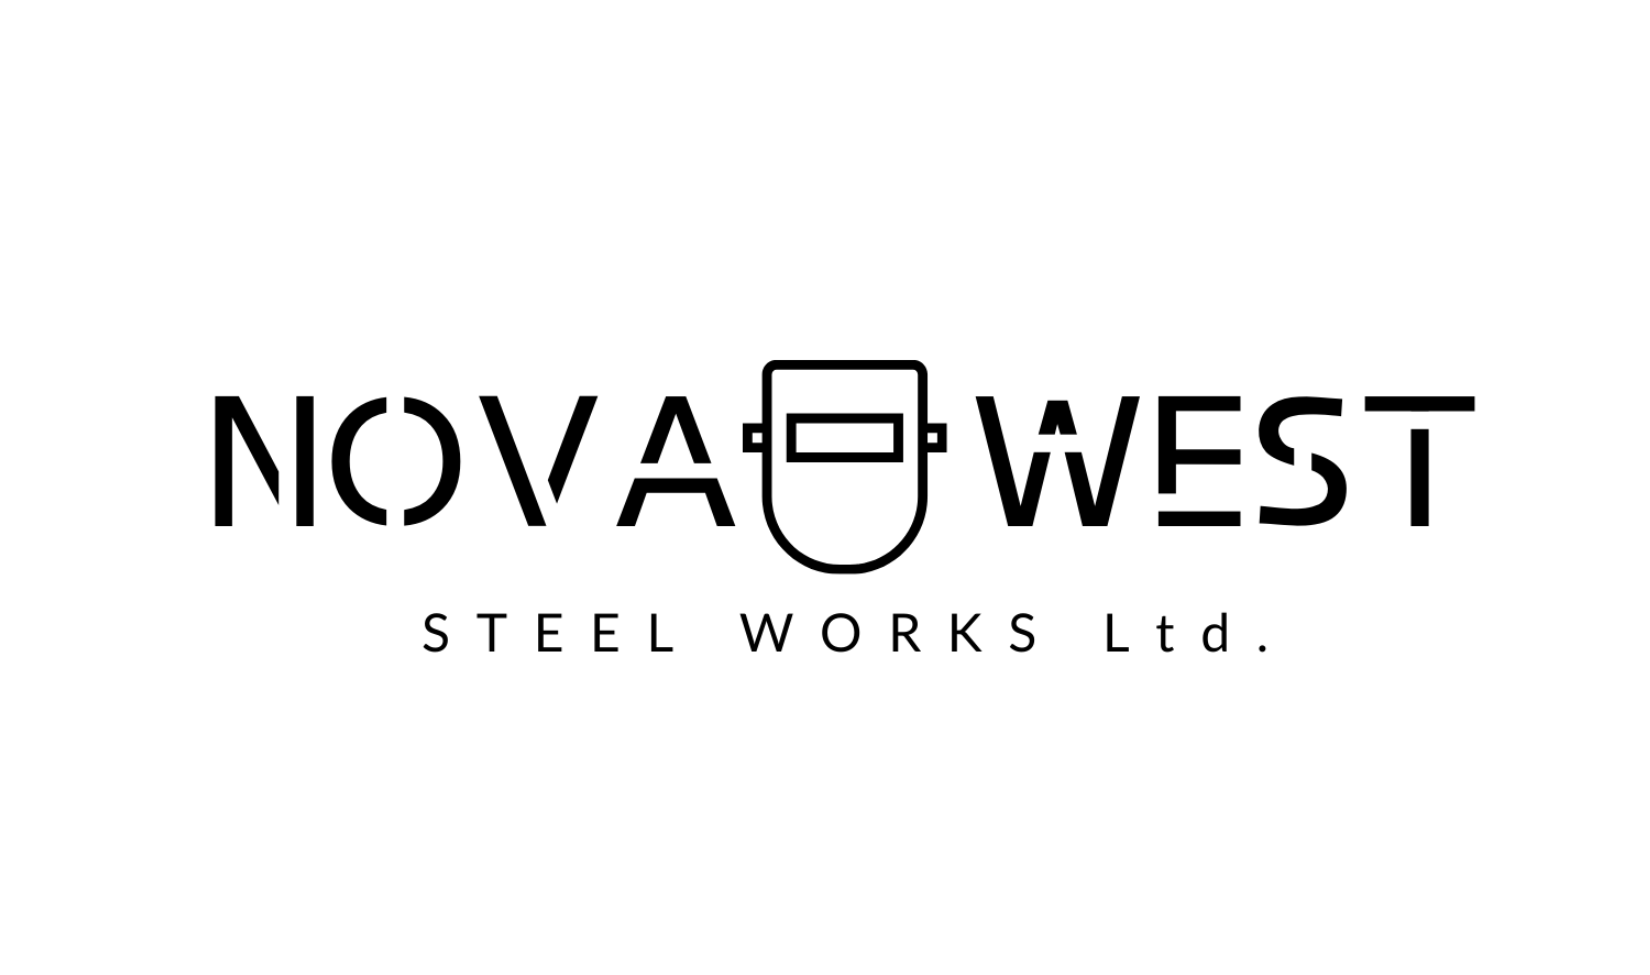 Nova West Steel Works